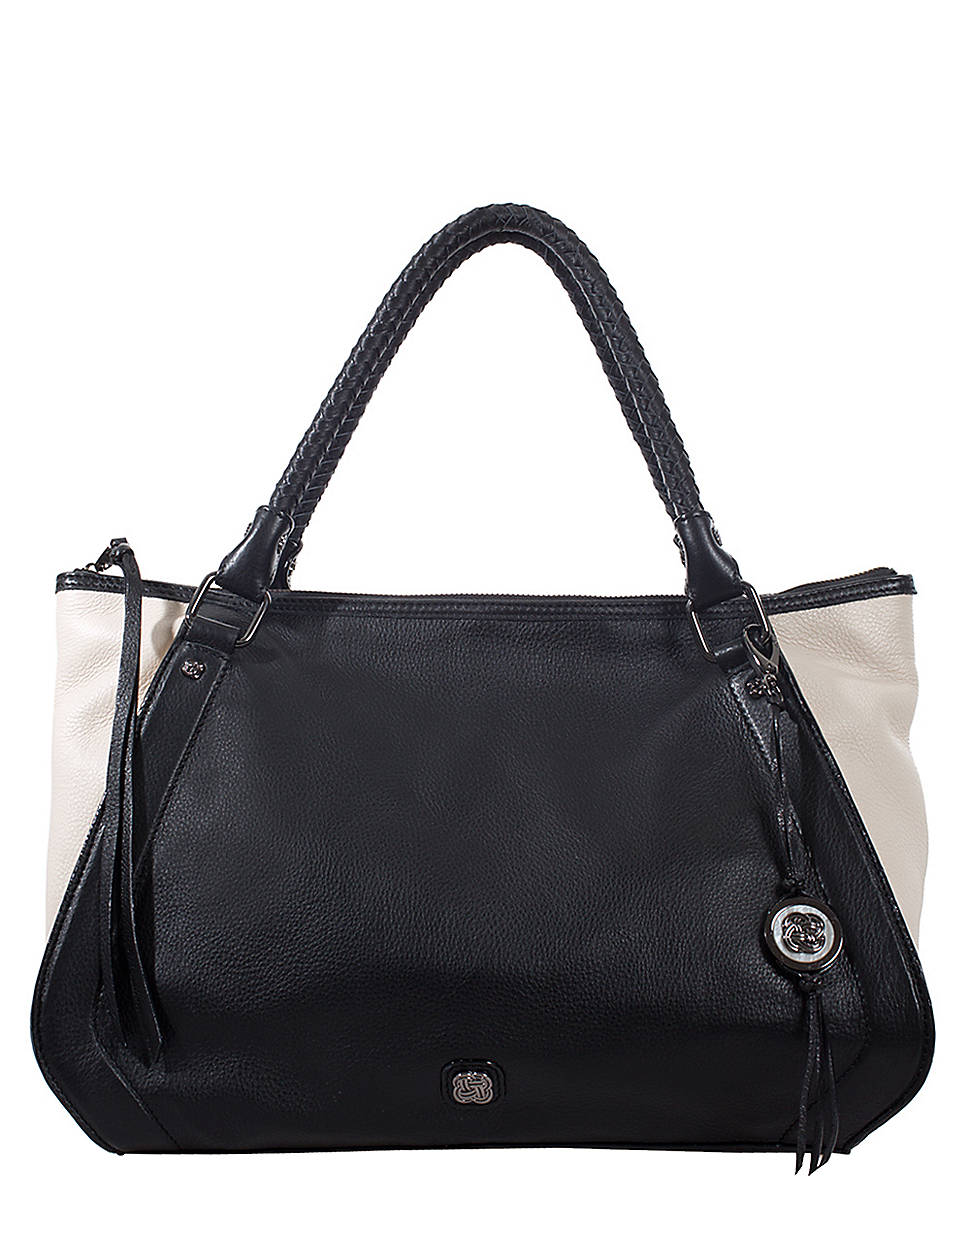 Elliott Lucca Marcela Leather Shopper Tote Bag in Black | Lyst